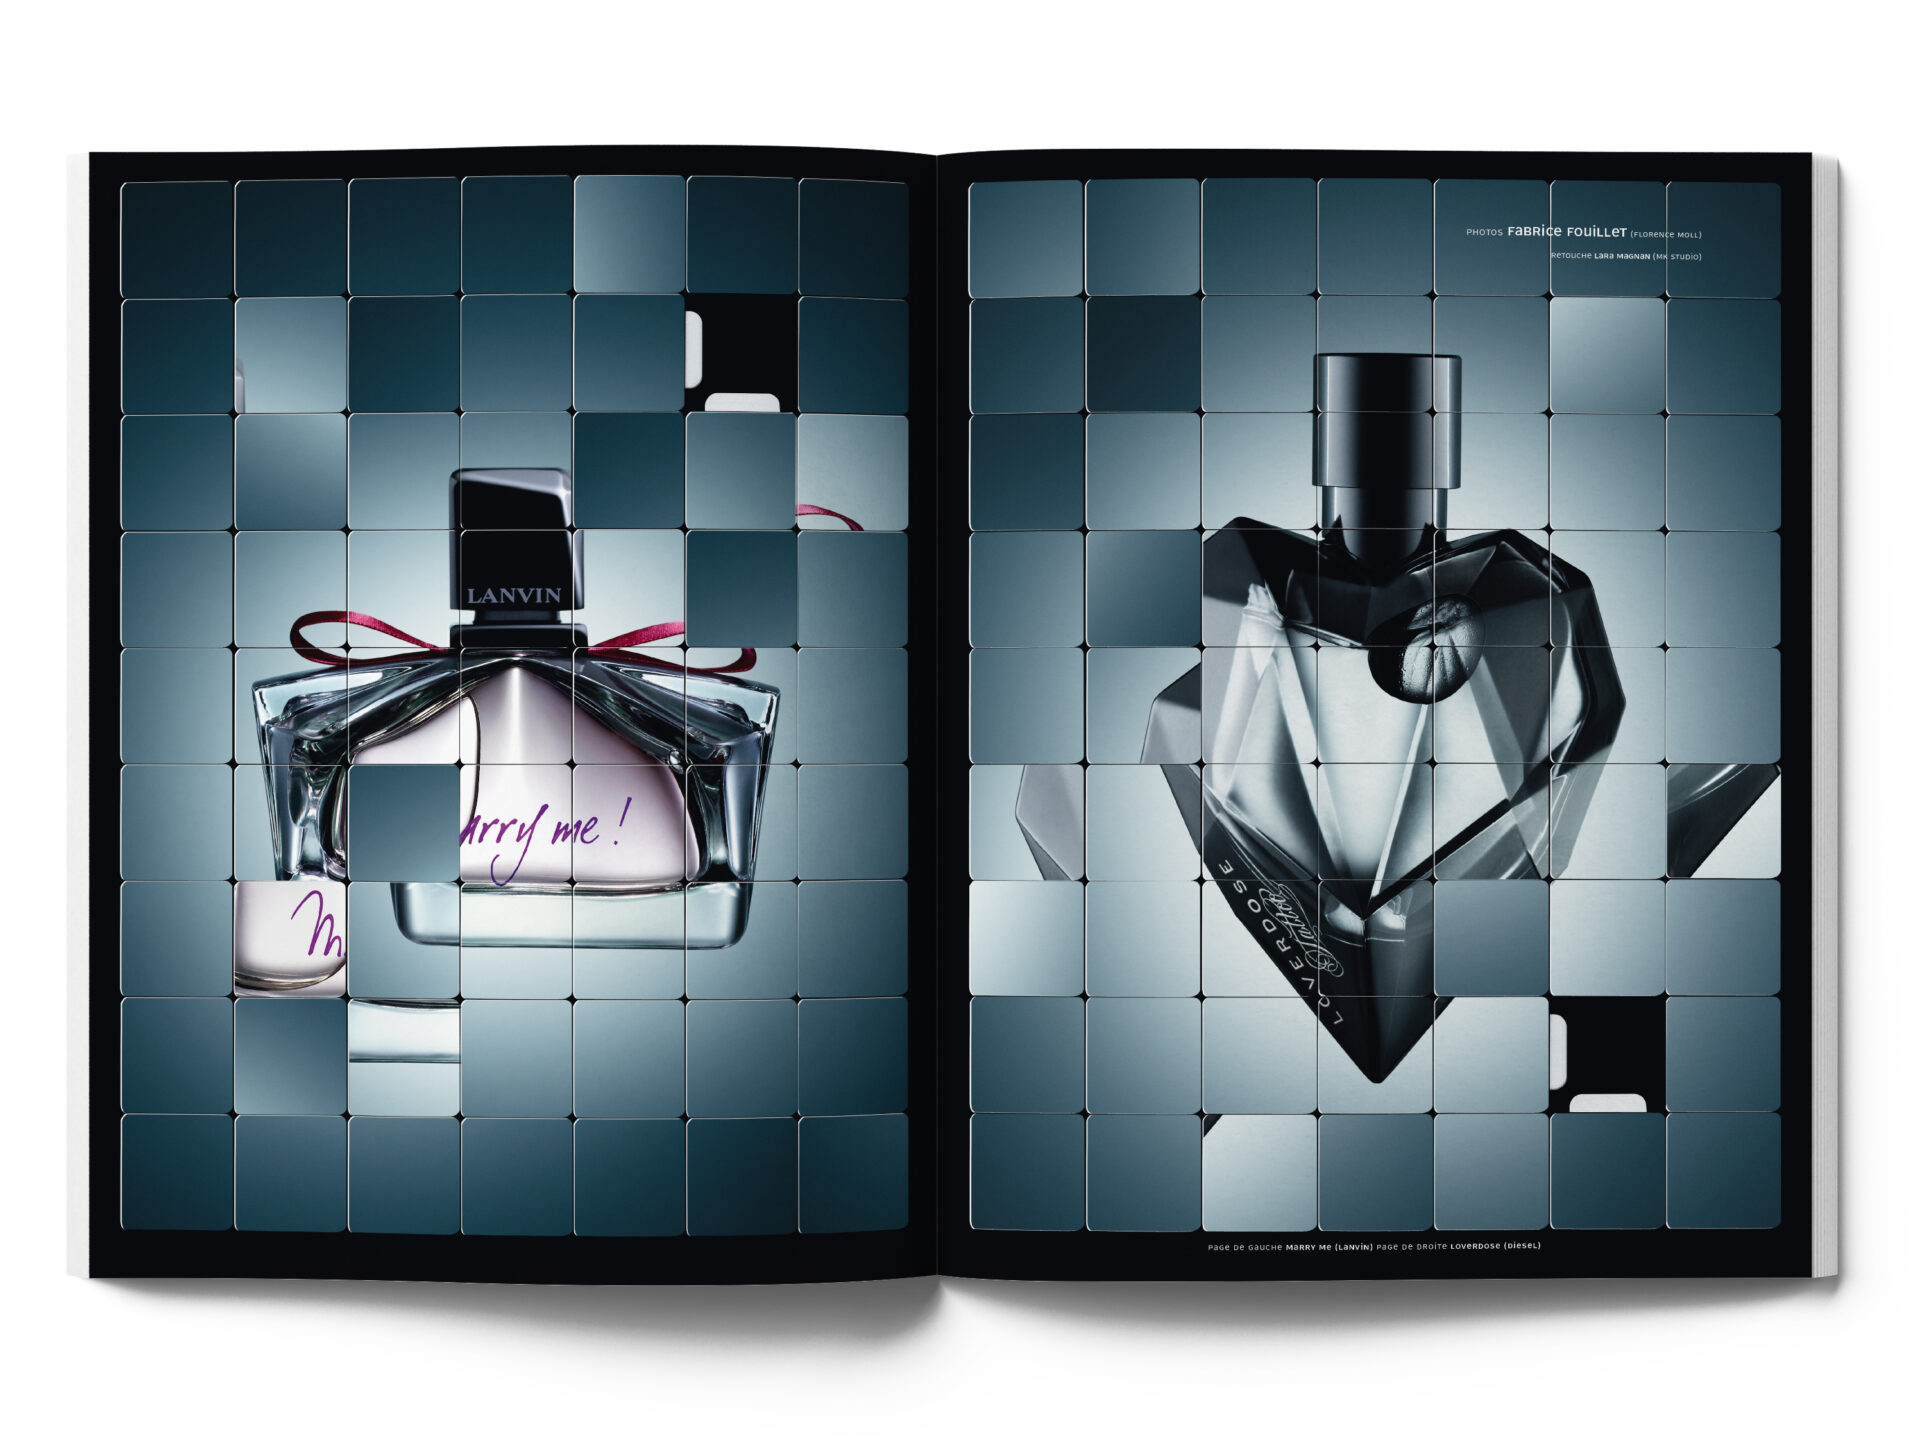 #09 Parfums Fabrice Fouillet